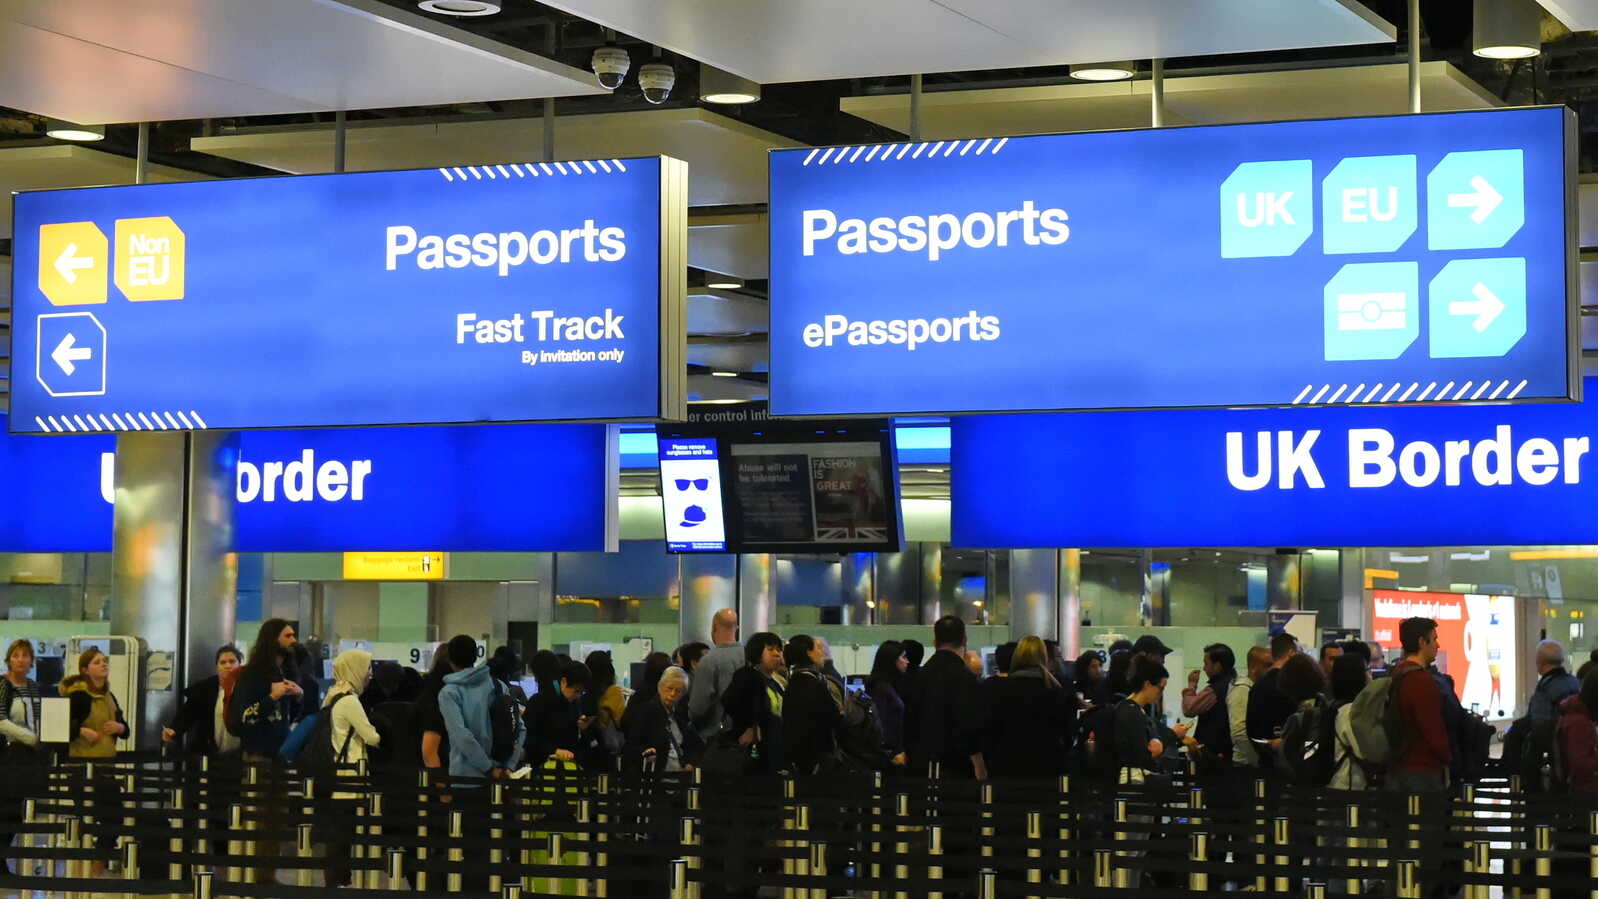 UK Border gates at Heathrow